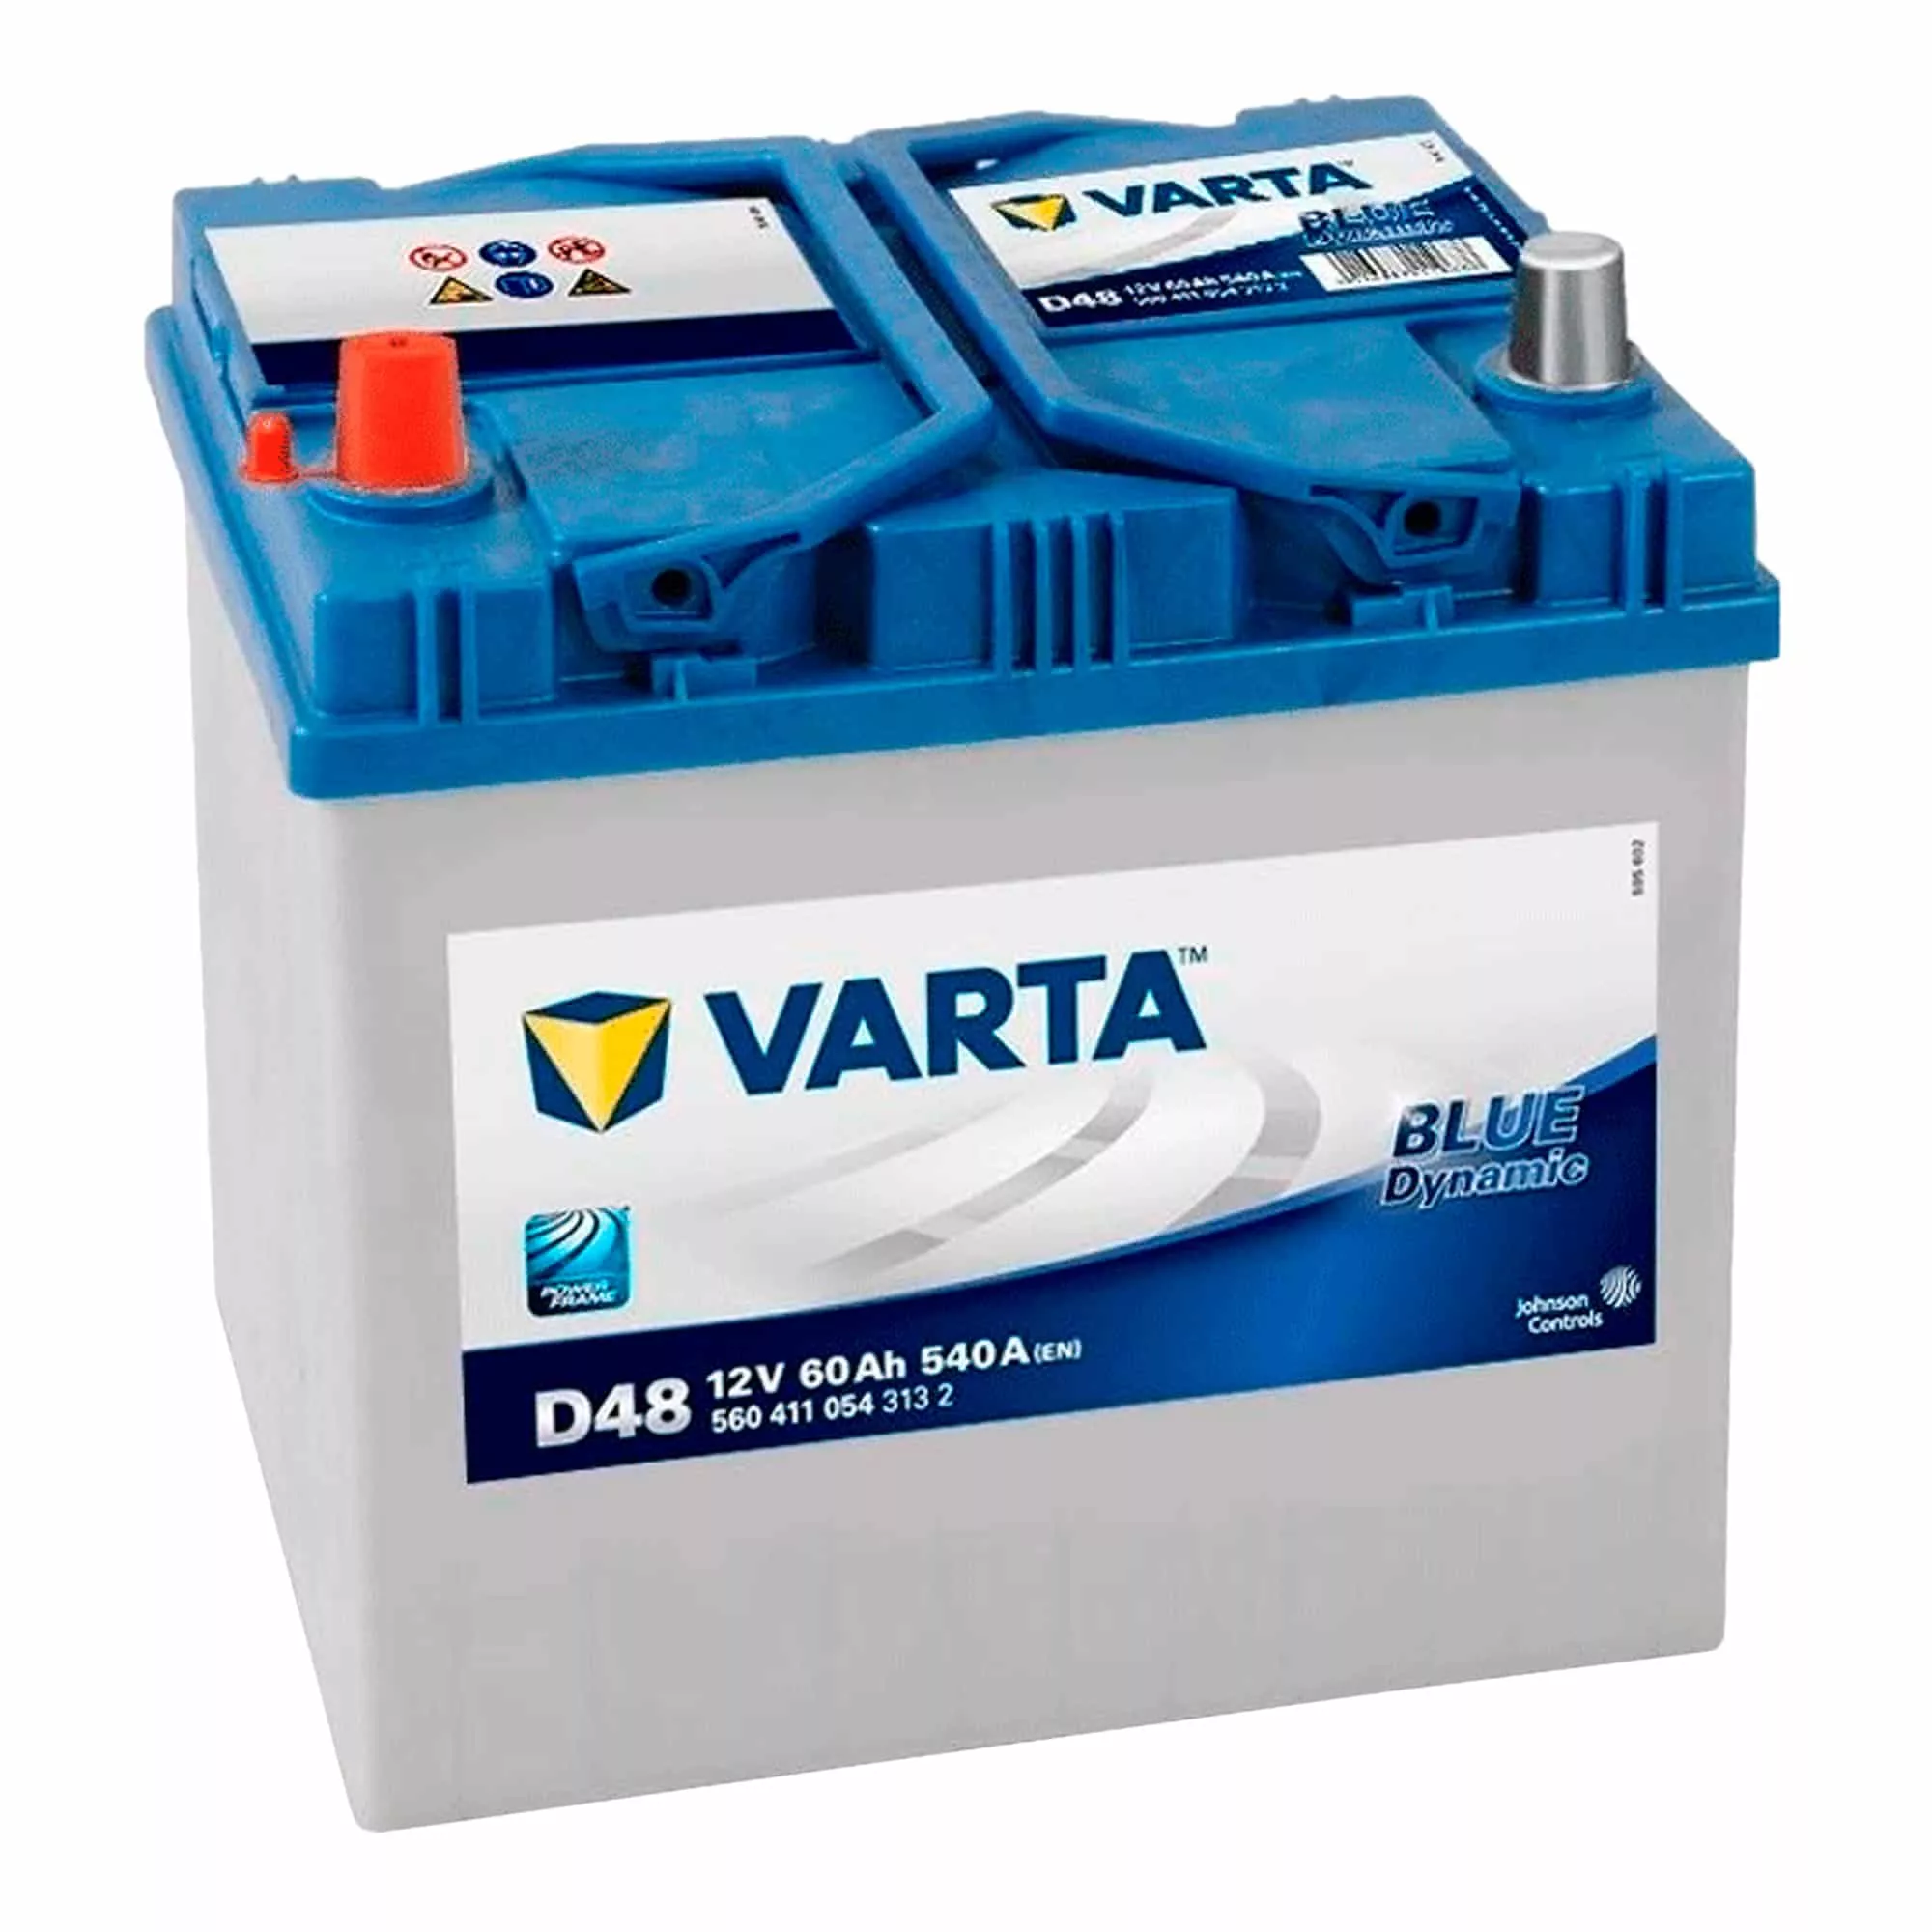 Автомобильный аккумулятор VARTA 6CT-60 Аз 560411054 Blue Dynamic